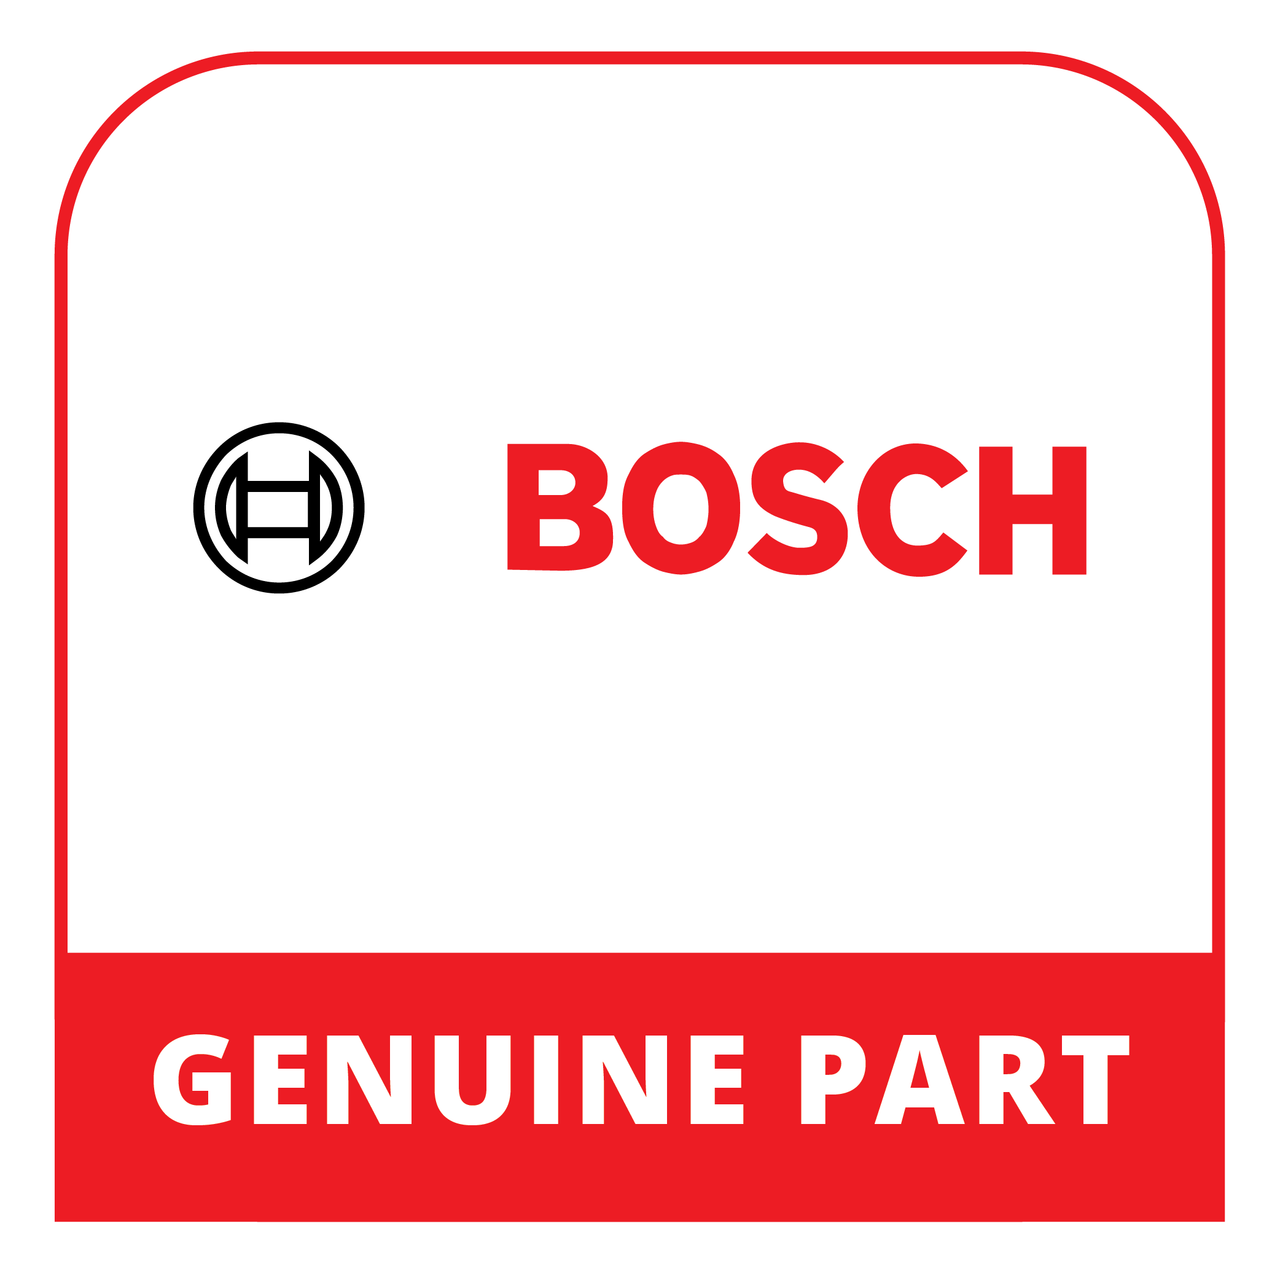 Bosch (Thermador) 20000032 - Panel-Facia - Genuine Bosch (Thermador) Part